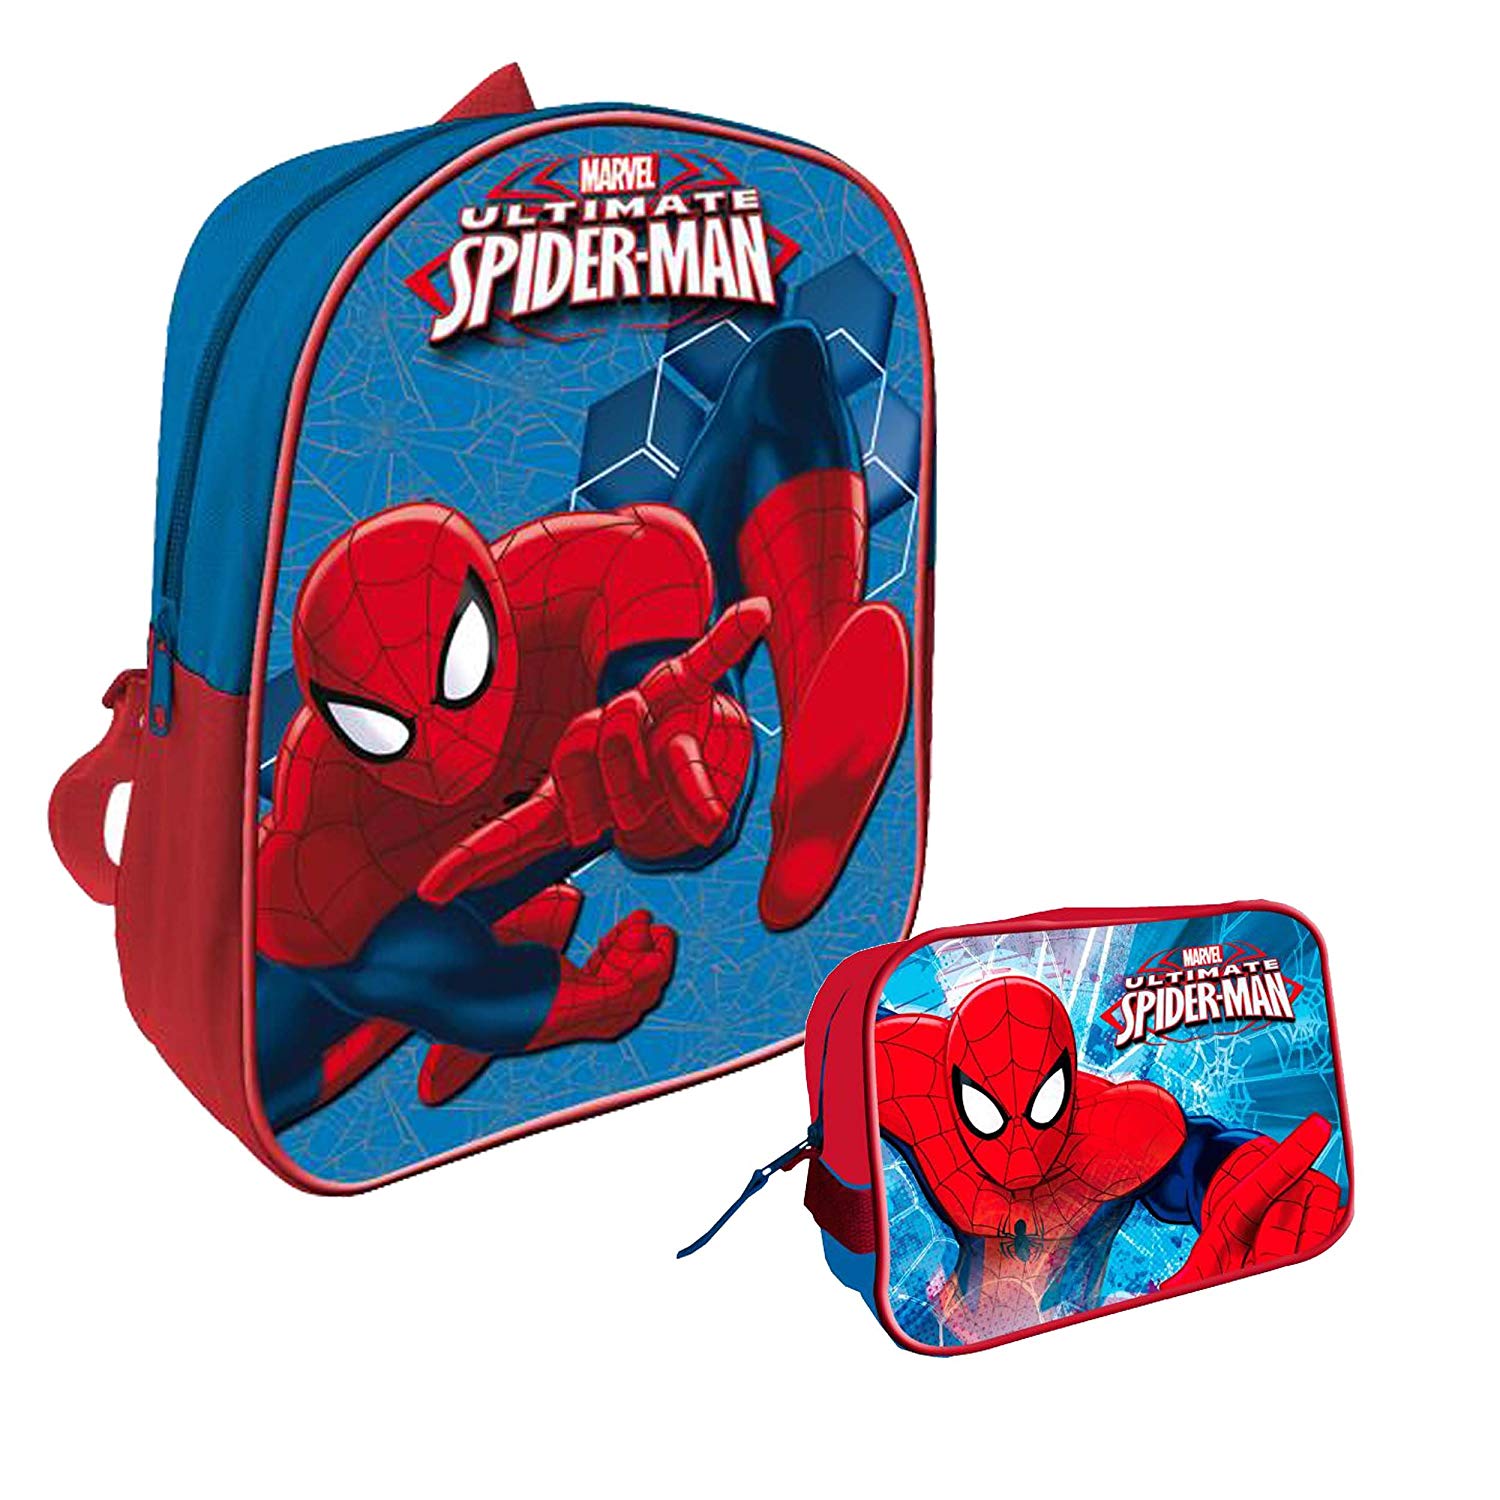 spiderman backpack for kindergarten